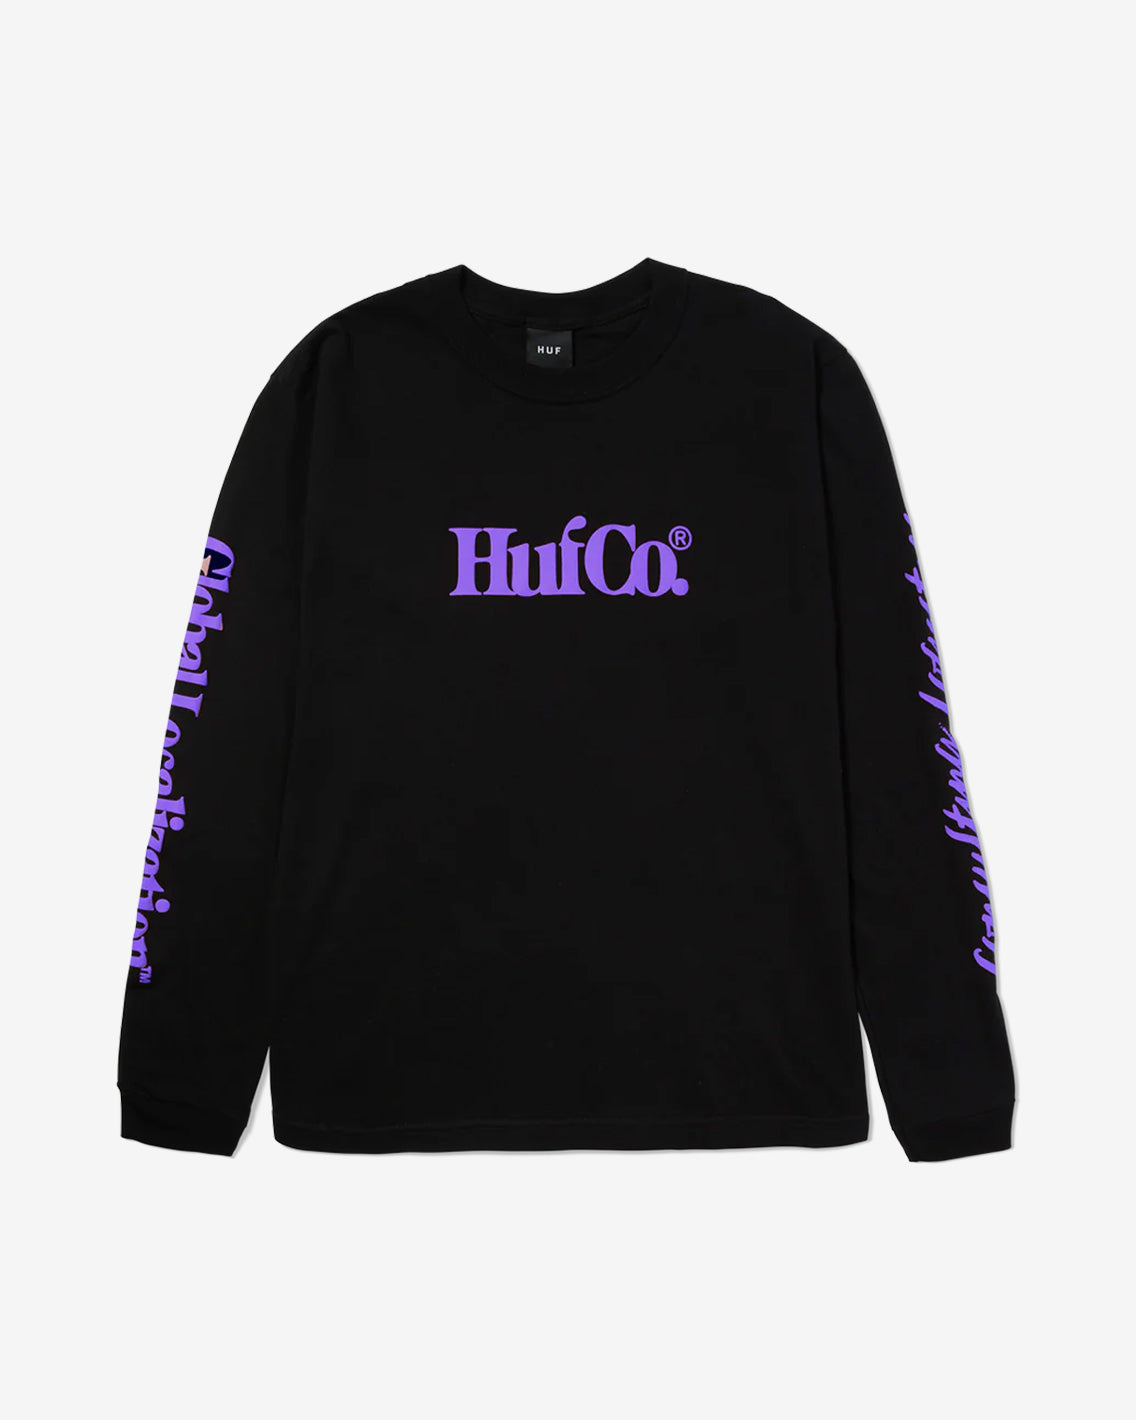 HUF - Huf Co L/S Tee - Black